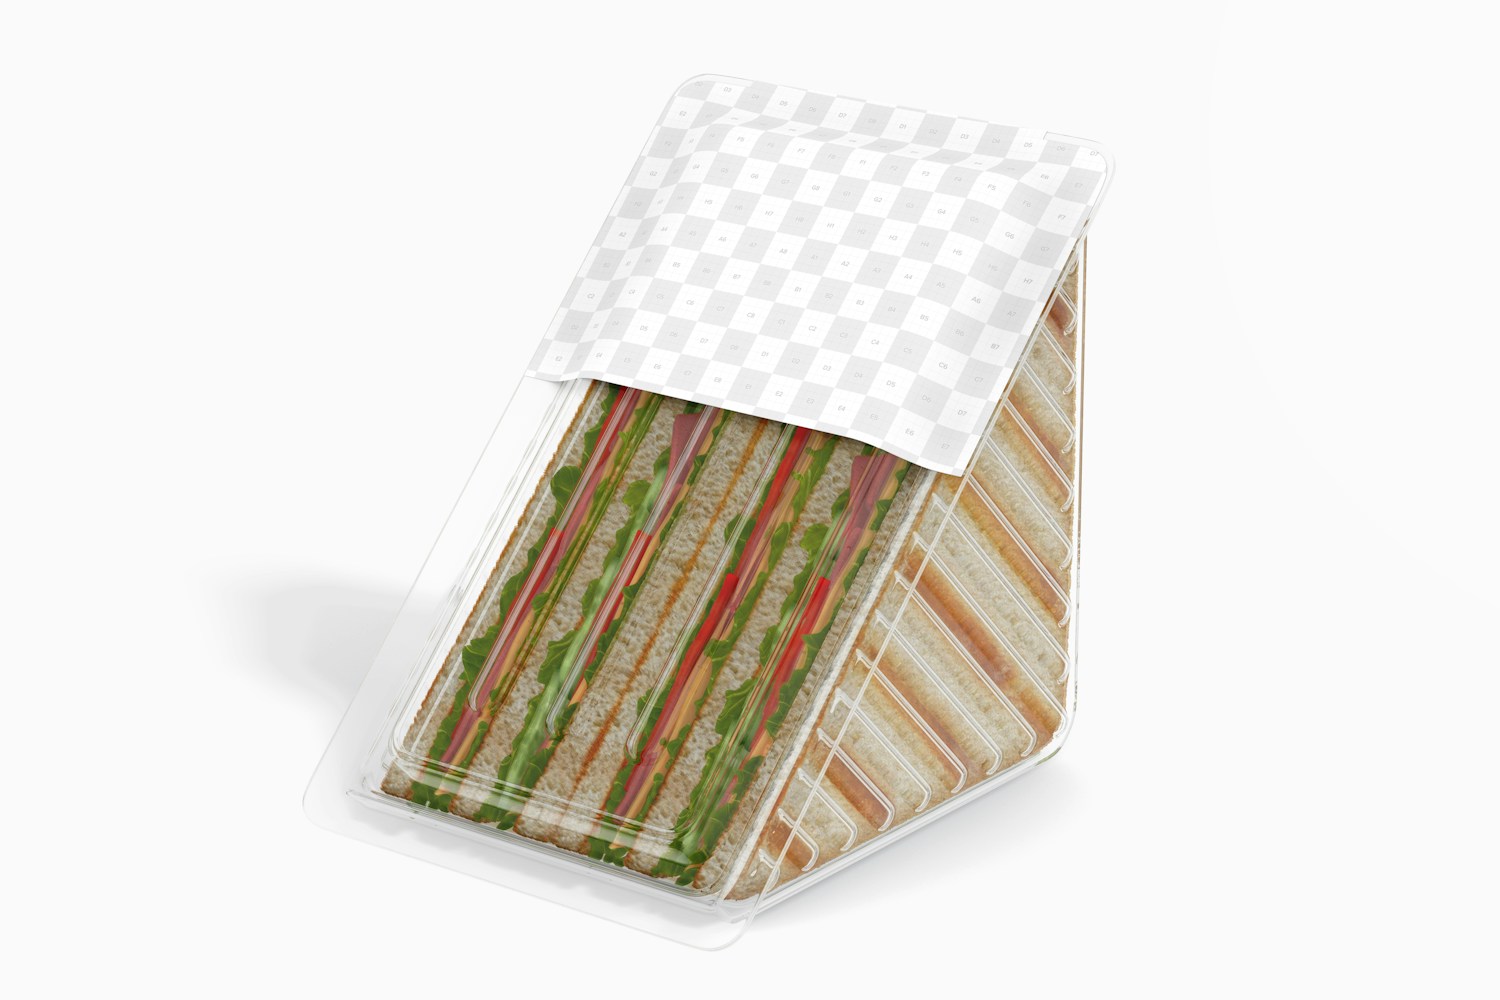 Plastic Sandwich Box Mockup, Side View